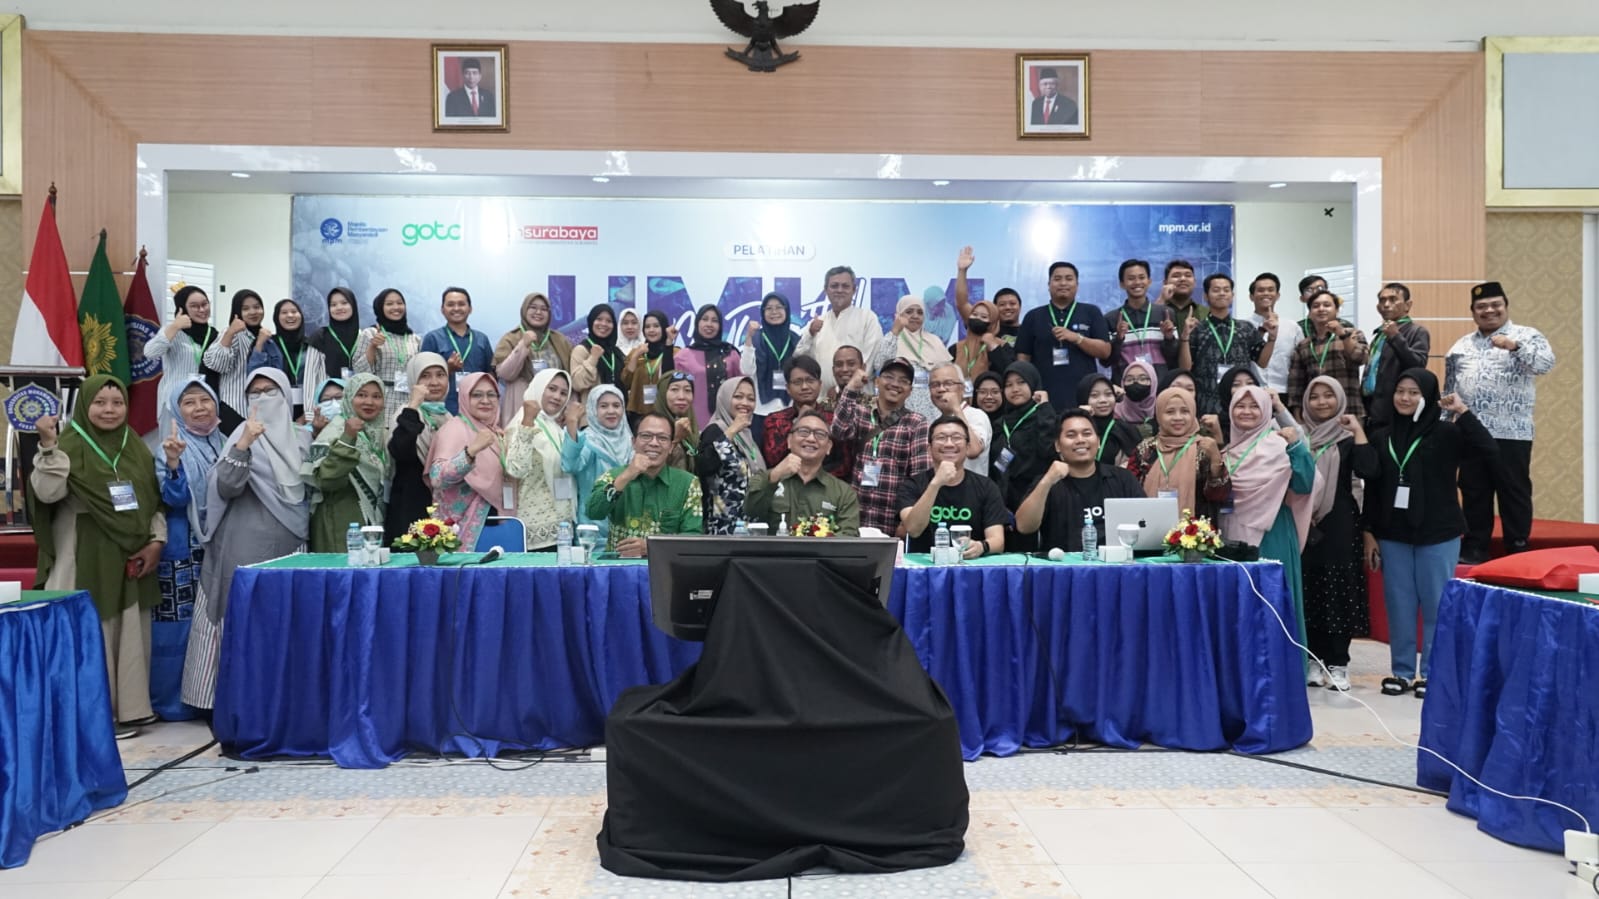 Majelis Pemberdayaan Masyarakat (MPM) Pimpinan Pusat (PP) Muhammadiyah mendorong kemajuan Usaha Mikro Kecil dan Menengah (UMKM) dengan penjualan digital. Foto: UM Surabaya